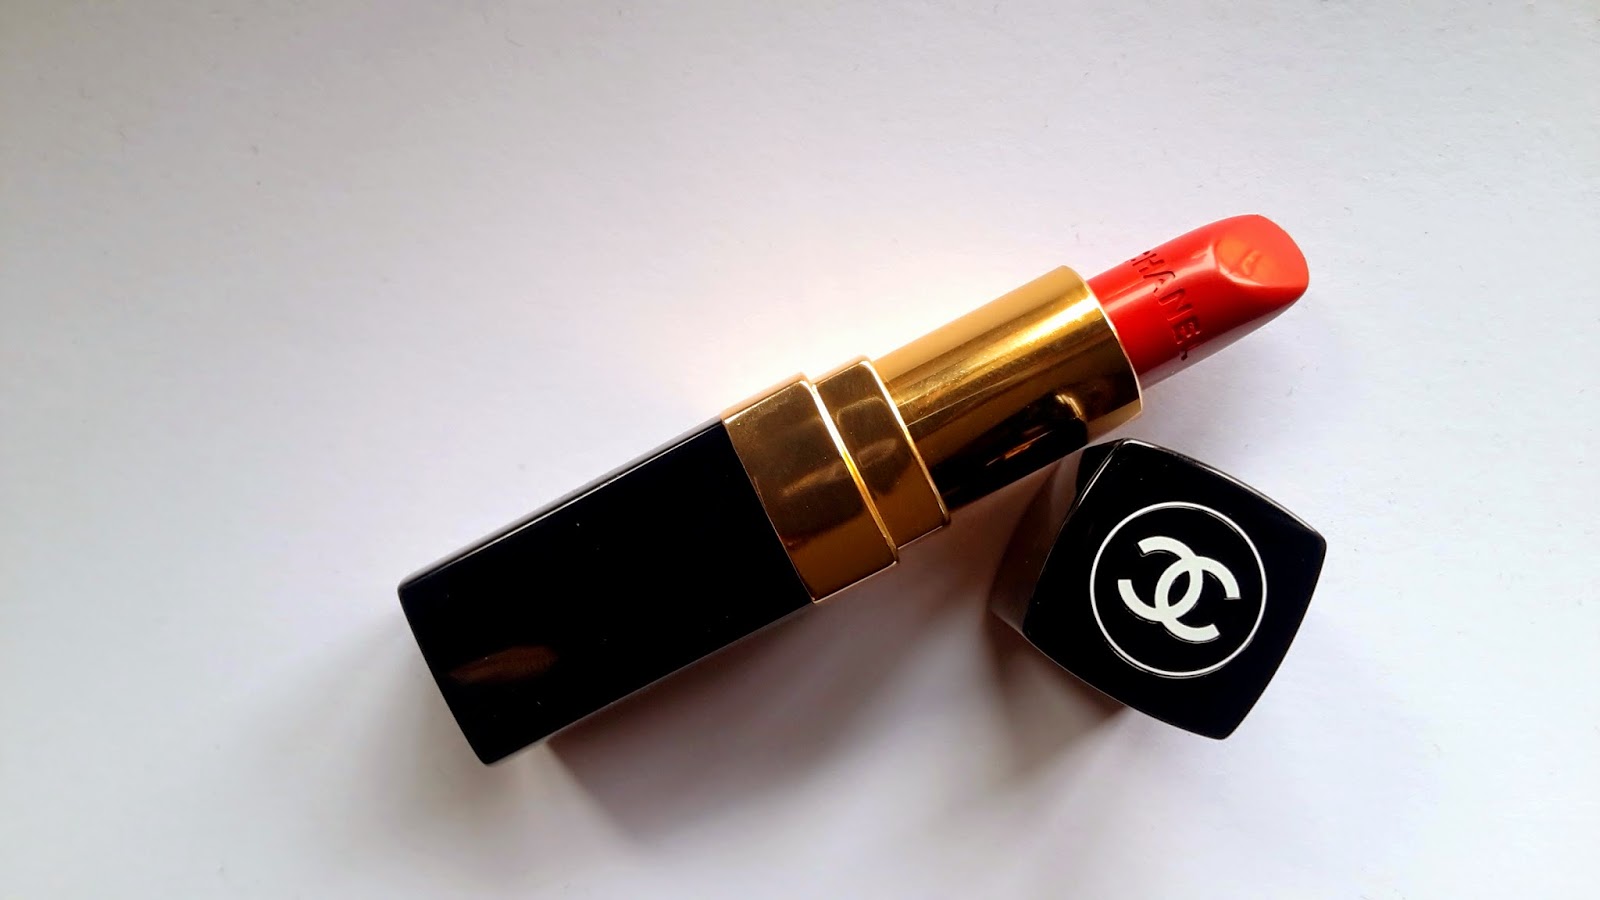 rouge coco chanel lipstick rossetto, rouge coco chanel gabrielle 444